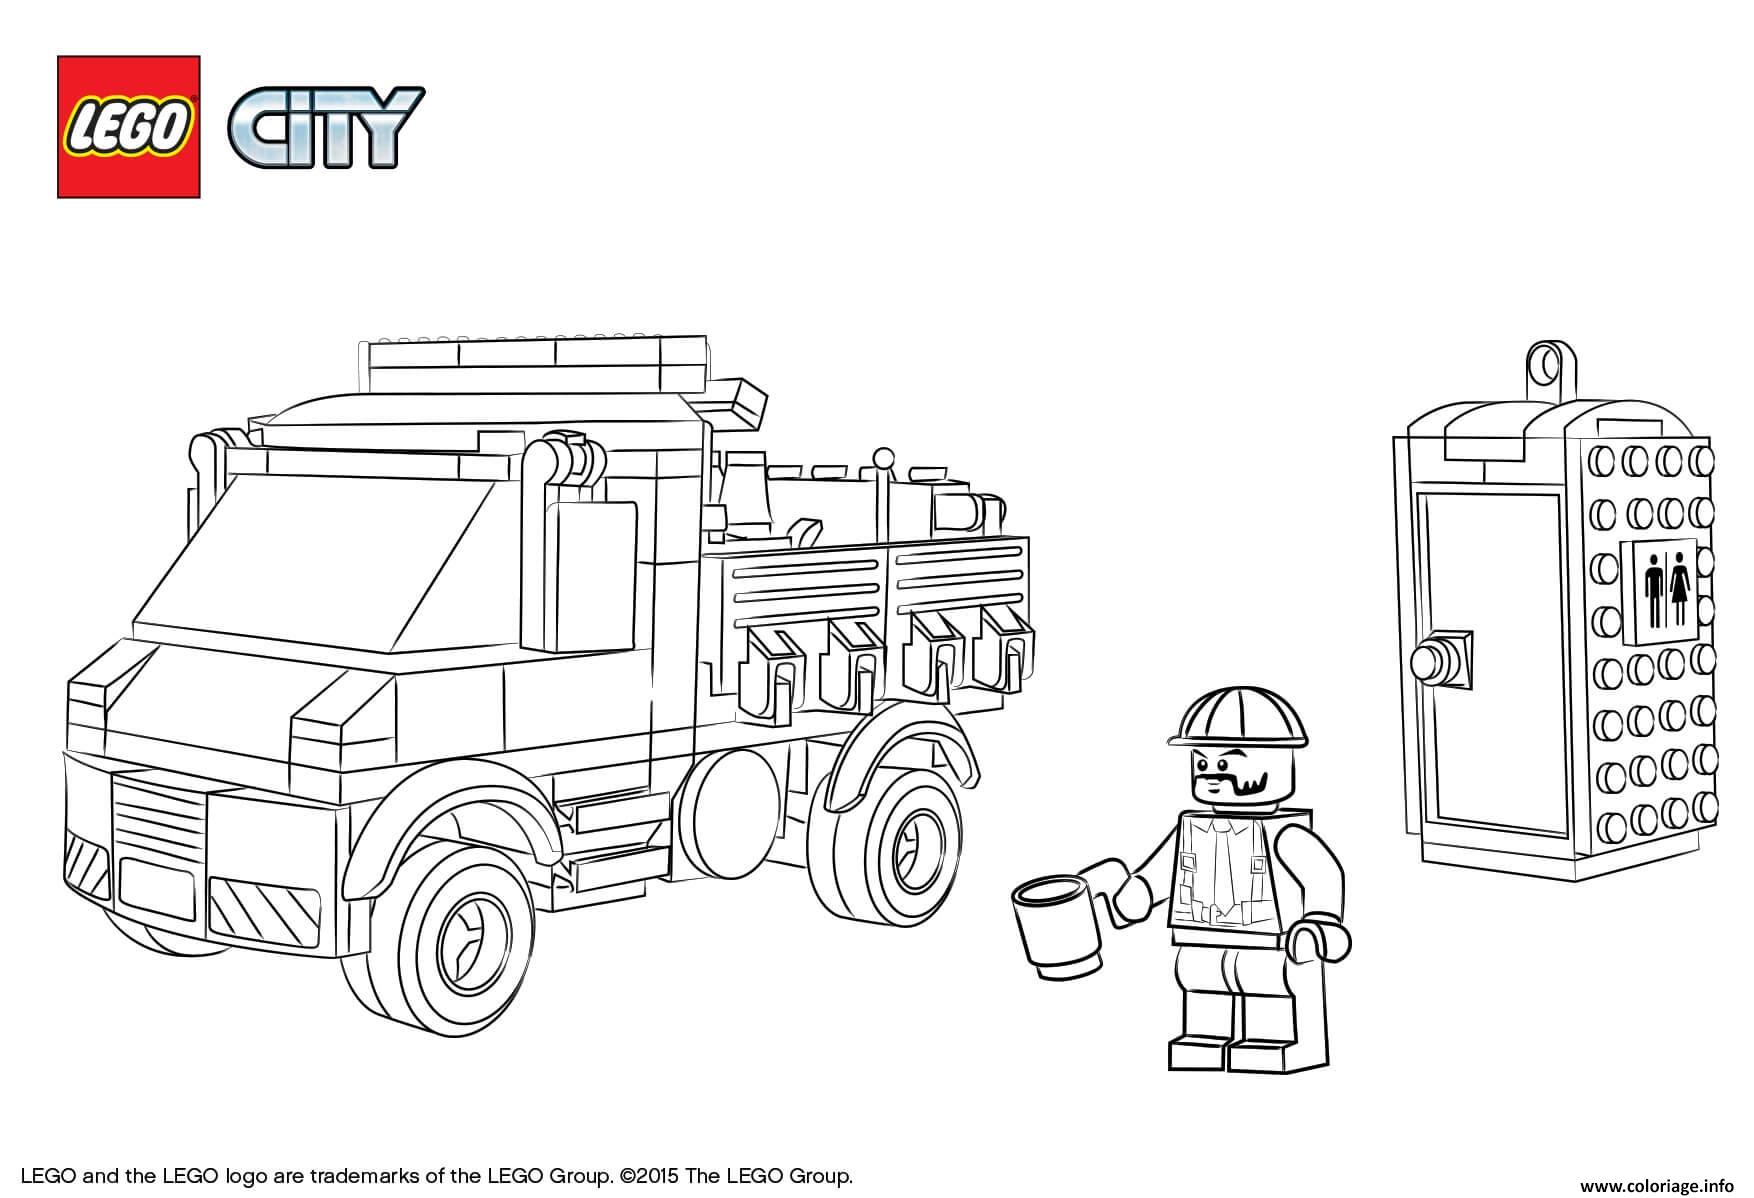 Coloriage Lego City Service Truck  JeColorie.com